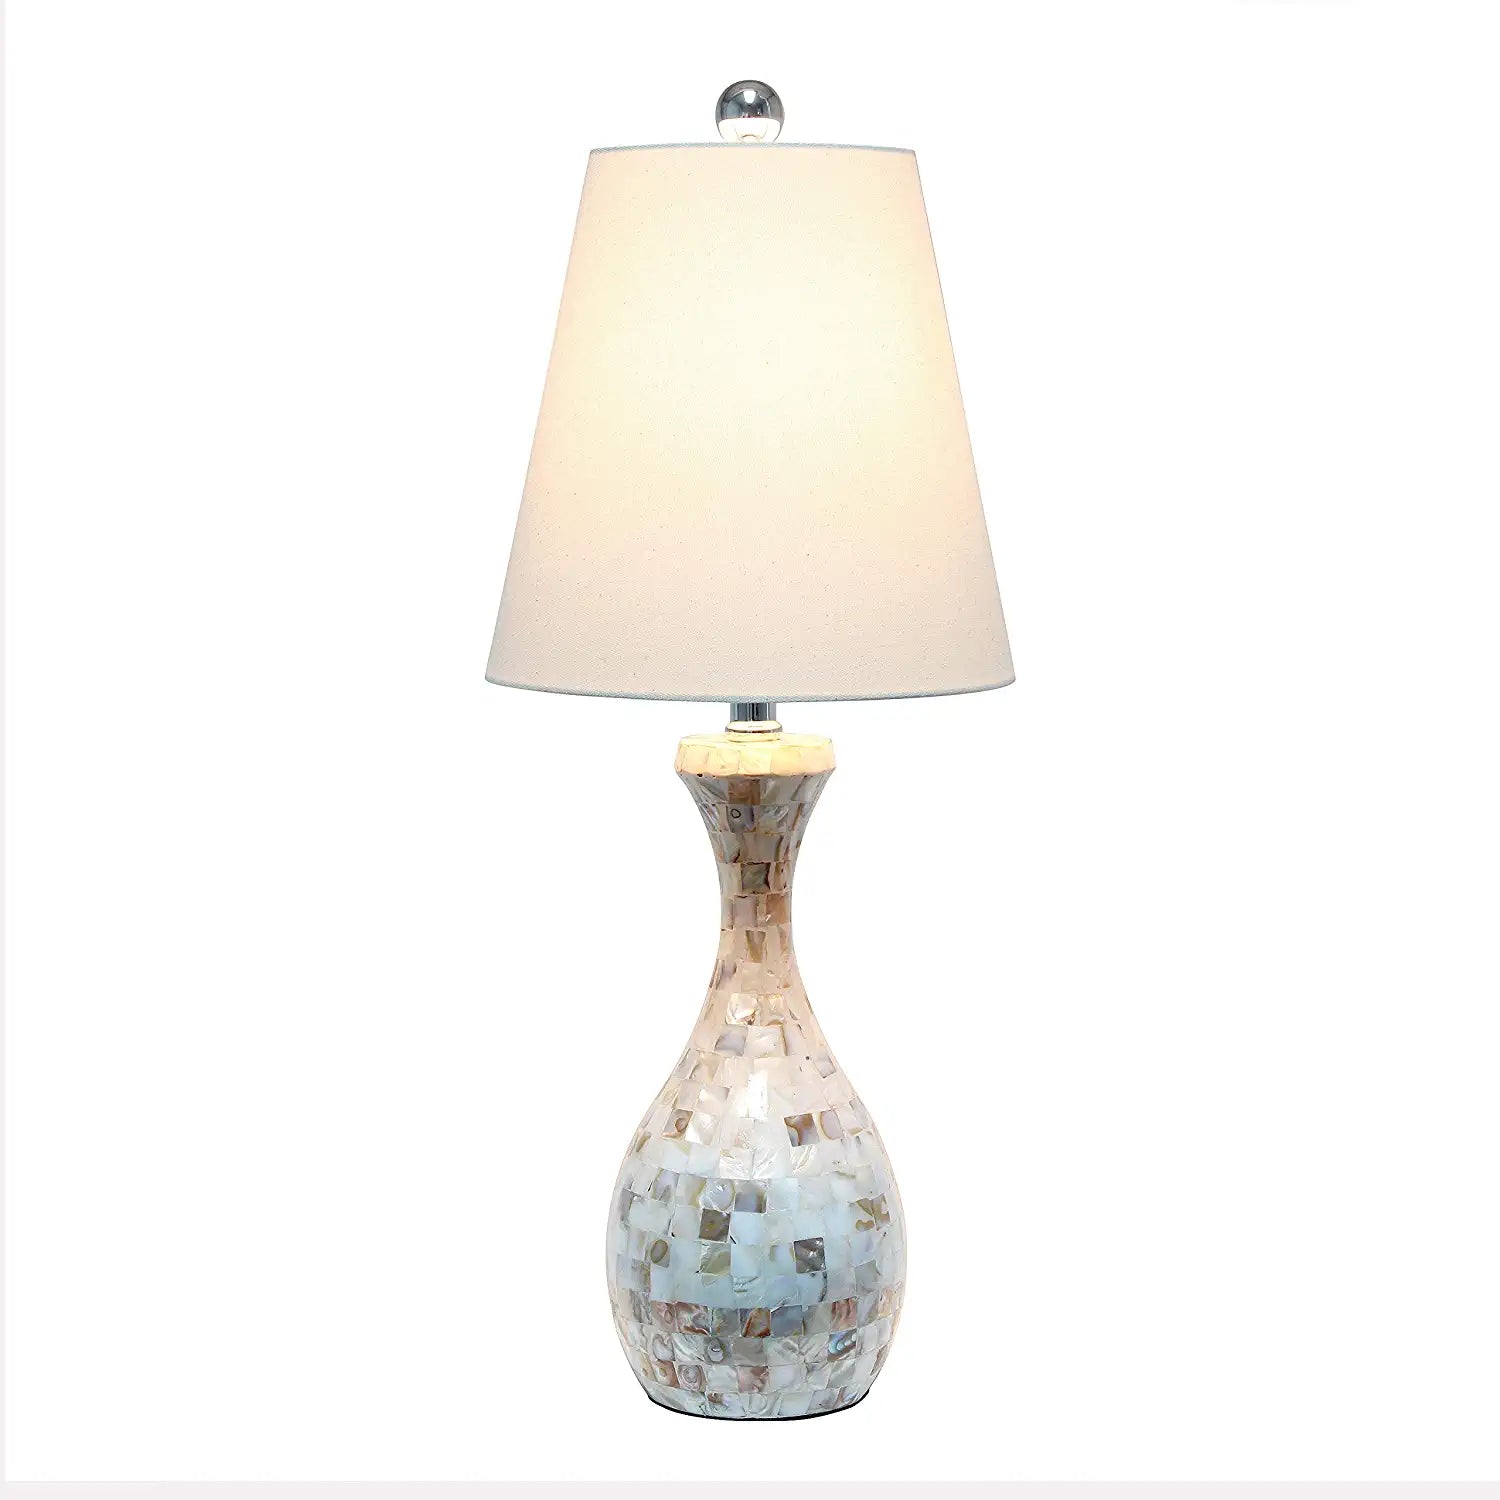 Elegant Designs LT3336-MOP Seashell Mosaic Look Table Lamp